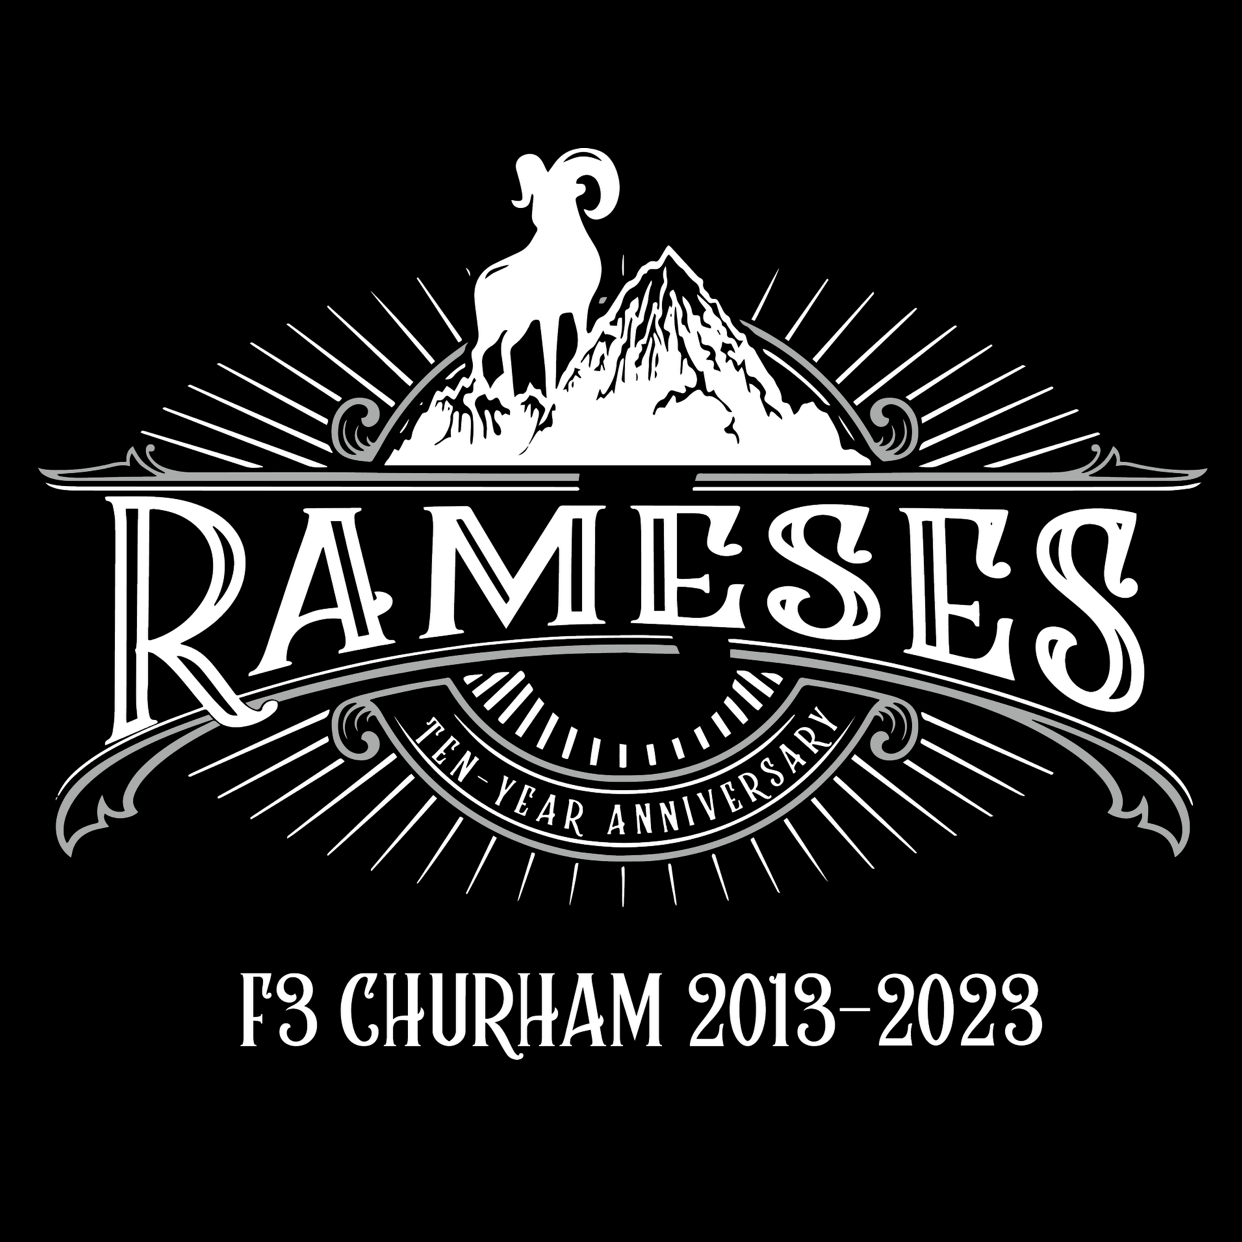 F3 Churham Rameses Pre-Order Sept 2023